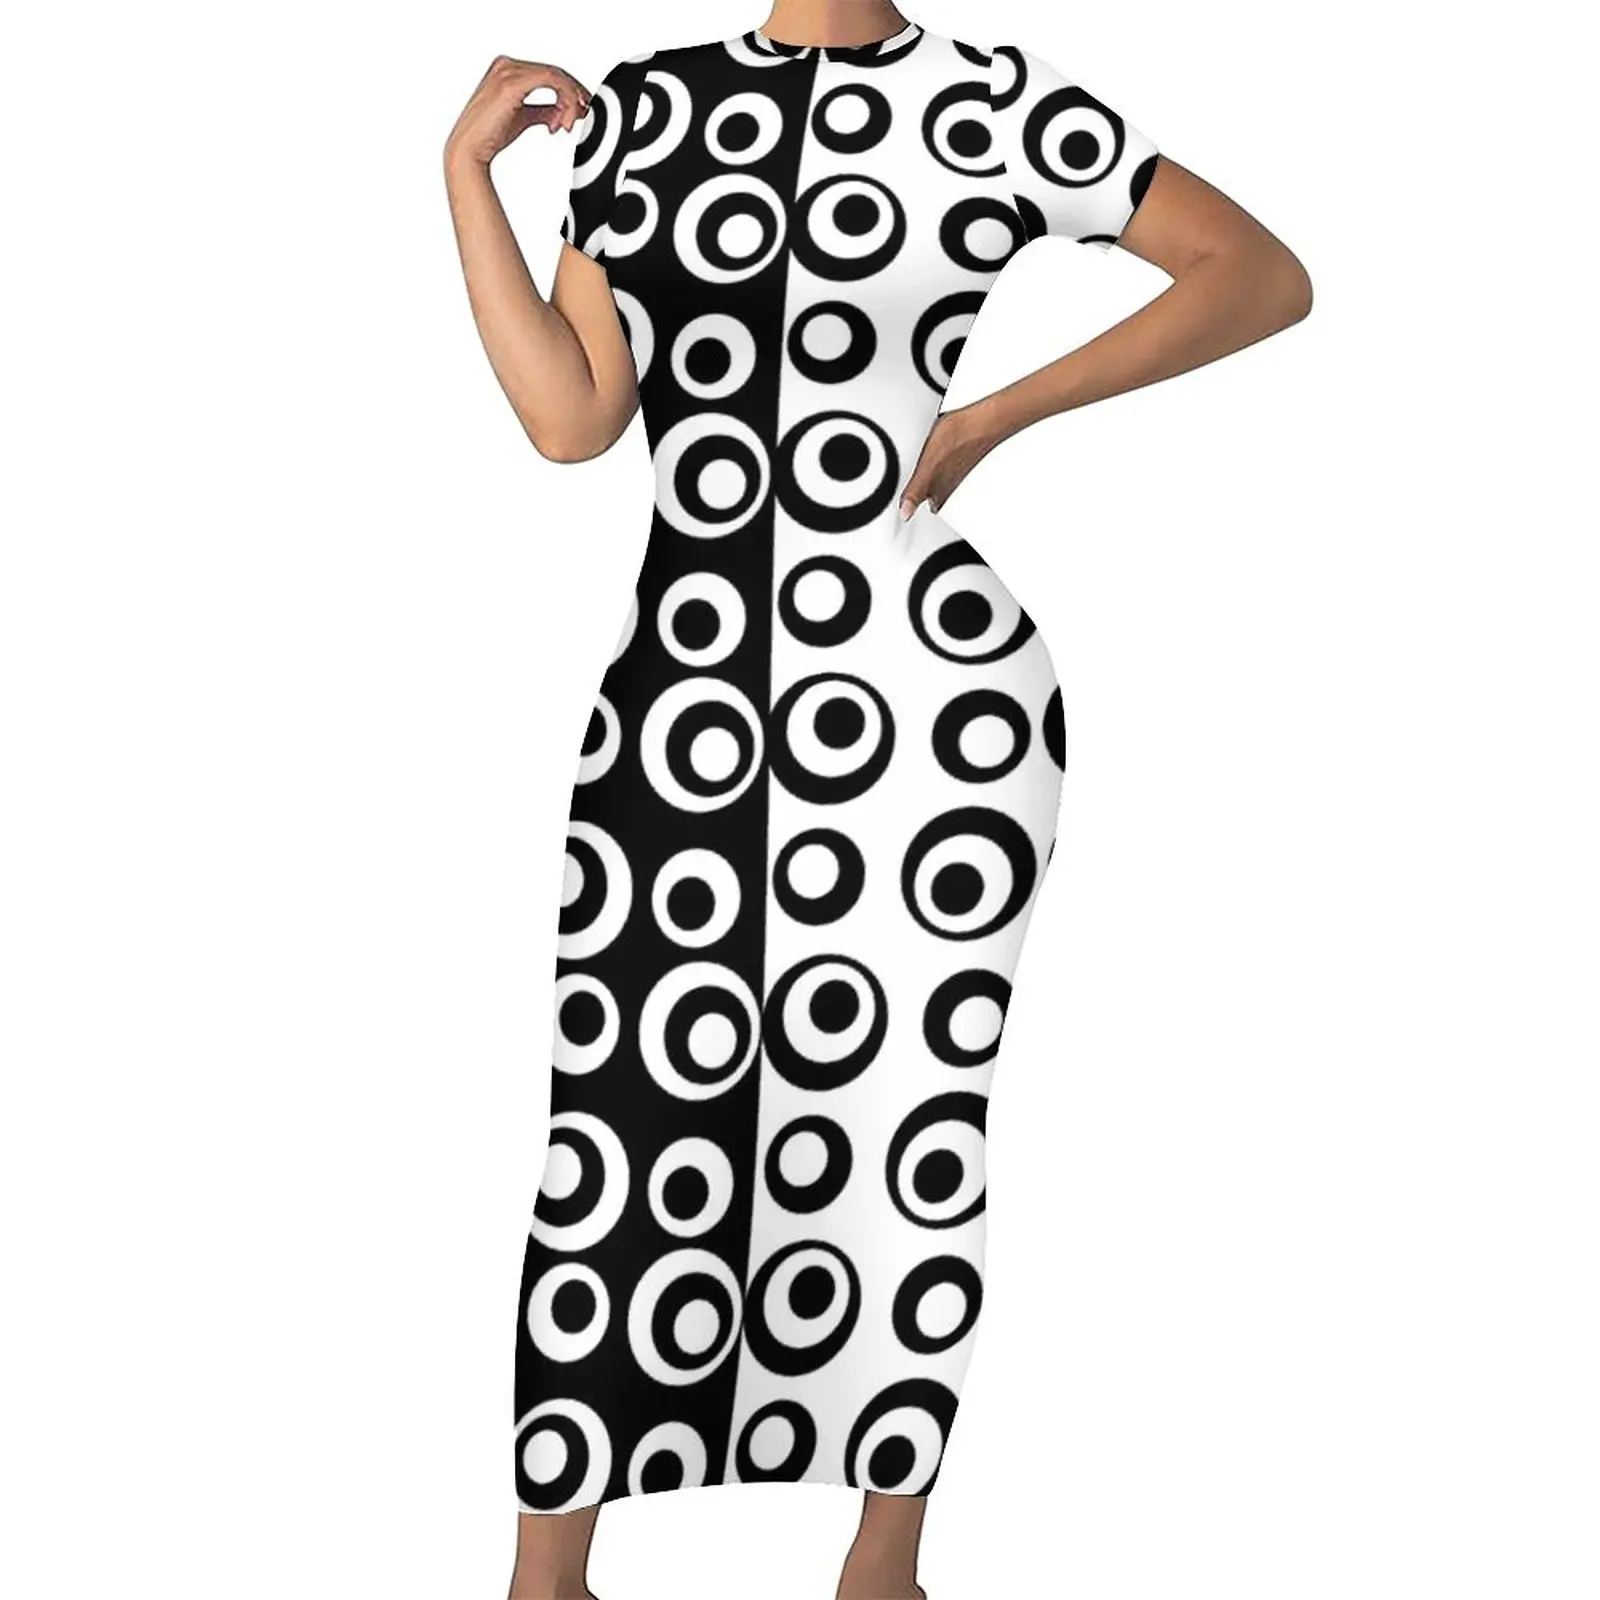 

Black And White Two Tone Dress Short Sleeve Mod Love Circles Dots Vintage Maxi Dresses Street Fashion Graphic Bodycon Dress